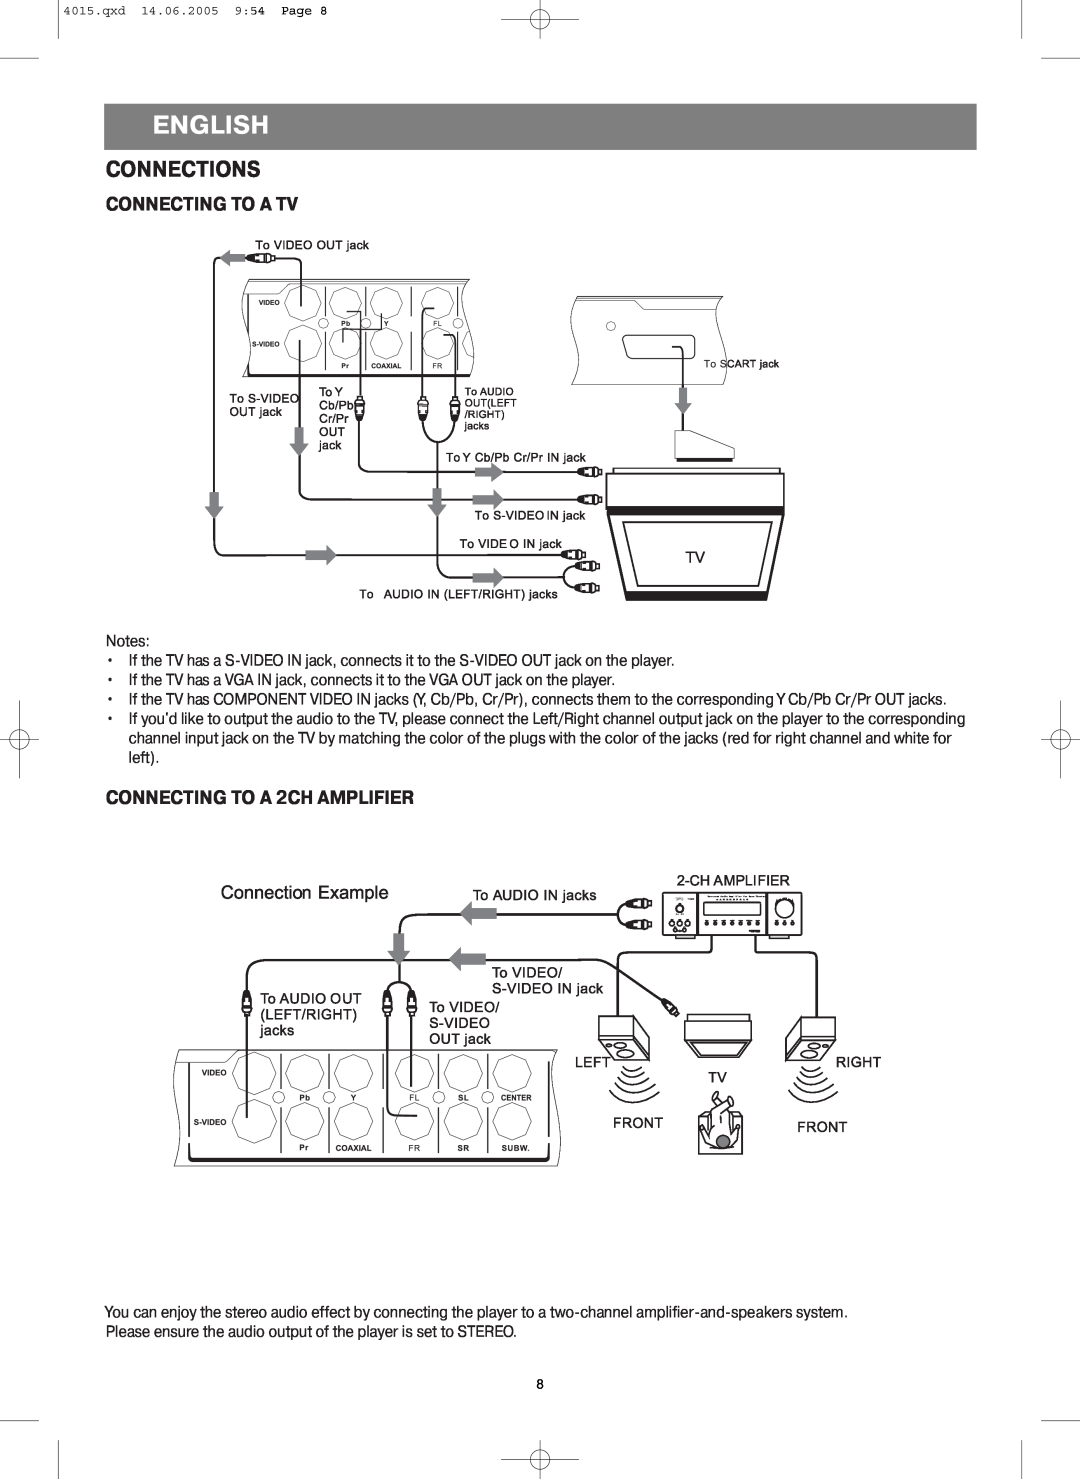 LG Electronics VT 4015 instruction manual Connections, Connecting To A Tv, CONNECTING TO A 2CH AMPLIFIER, English 